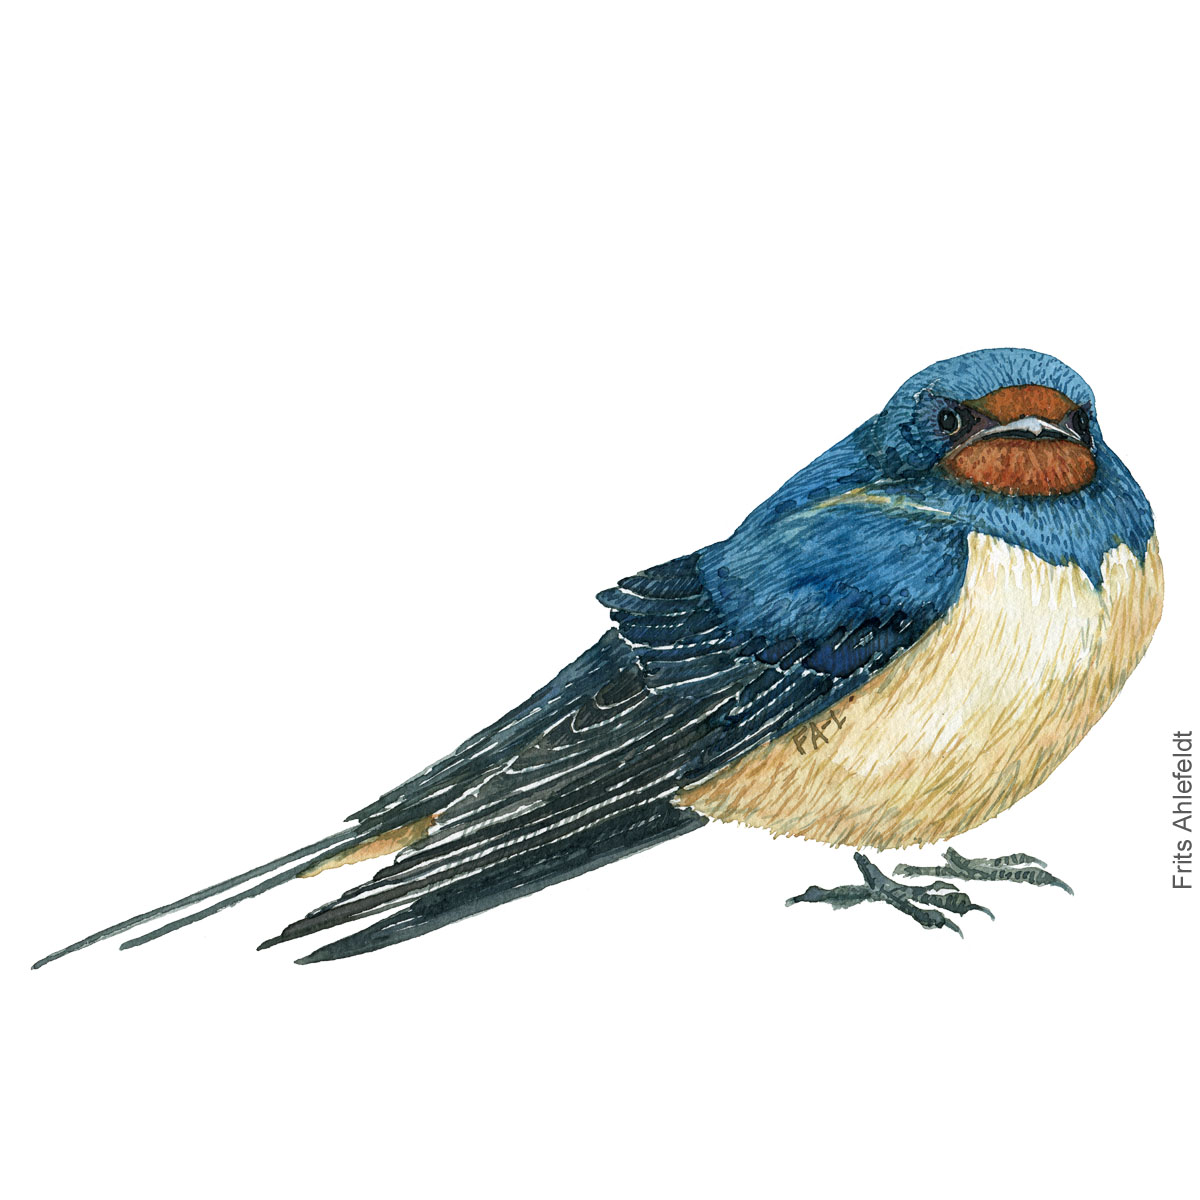 Barn Swallow - Landsvale Akvarel. Watercolor bird illustration by Frits Ahlefeldt